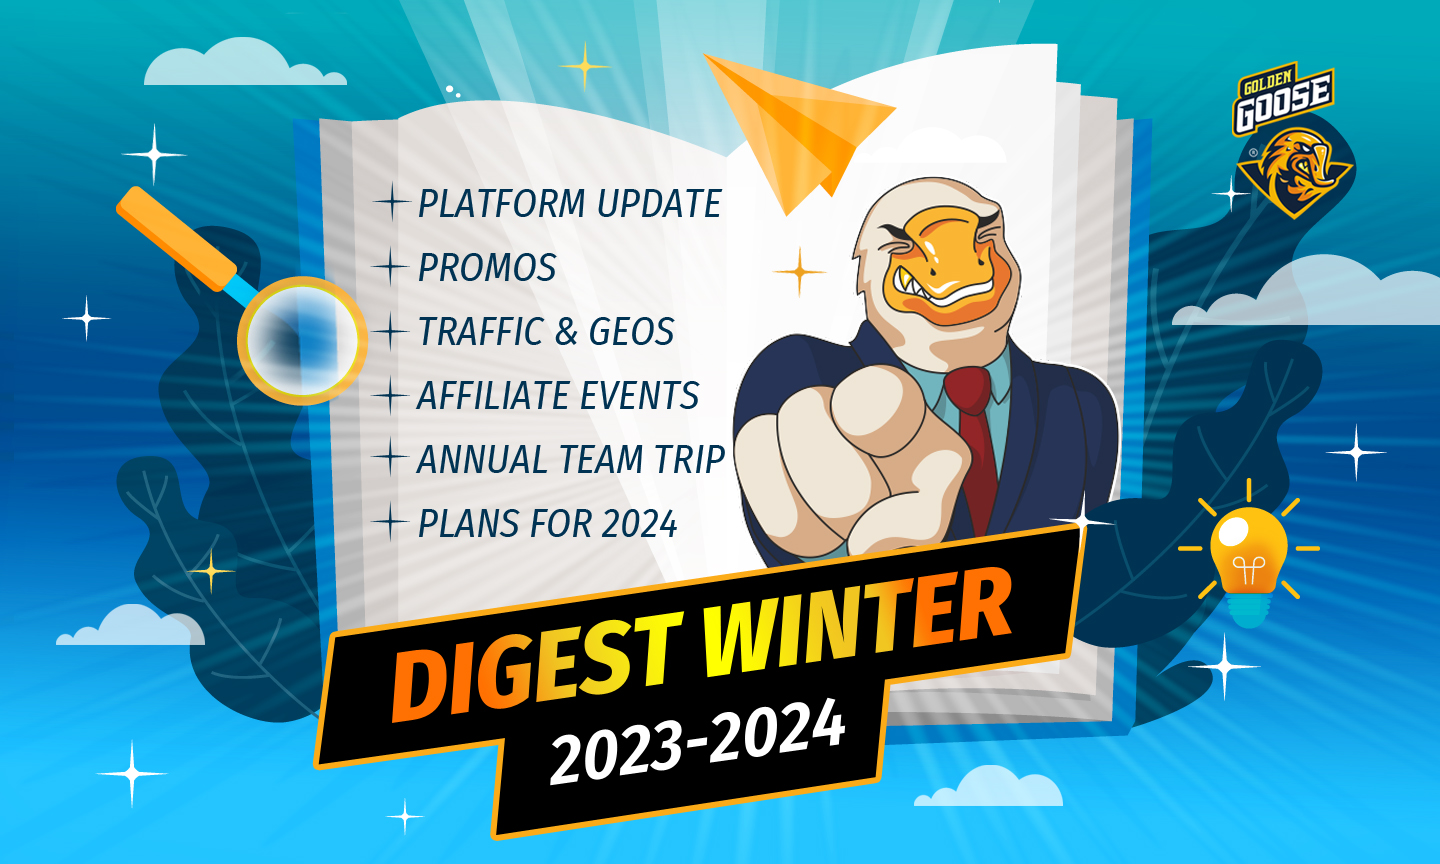 Golden Goose Digest: Winter 2023-2024